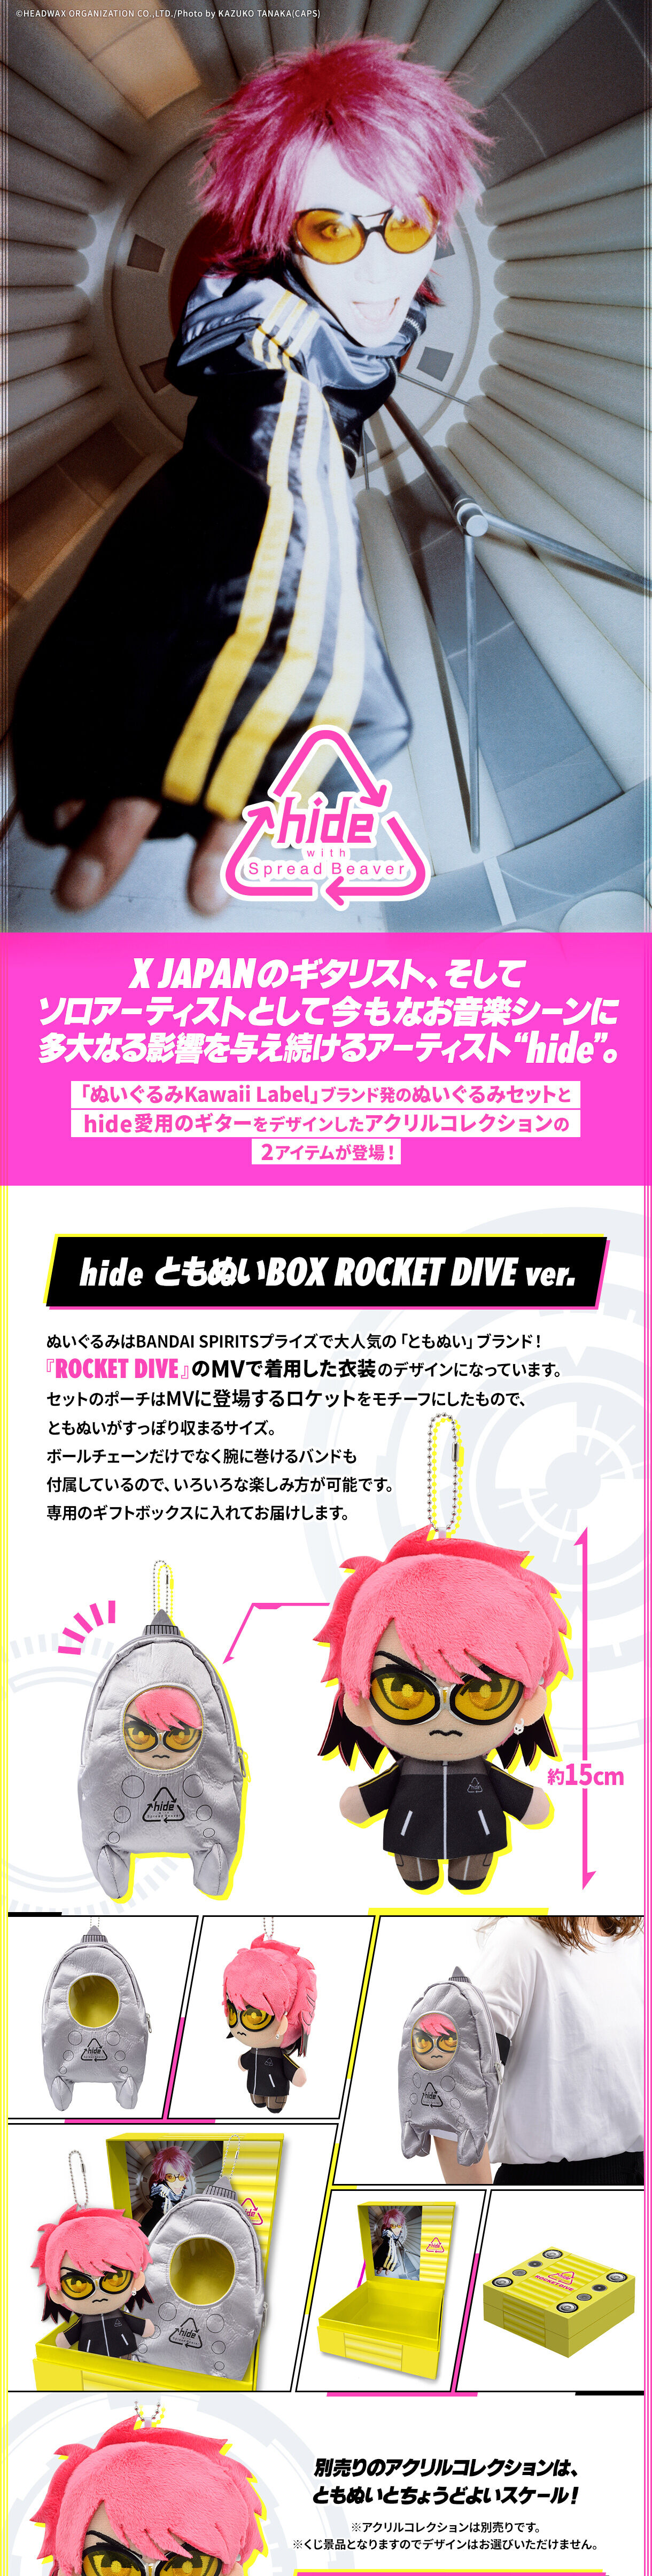 hide ともぬいBOX ROCKET DIVE ver.